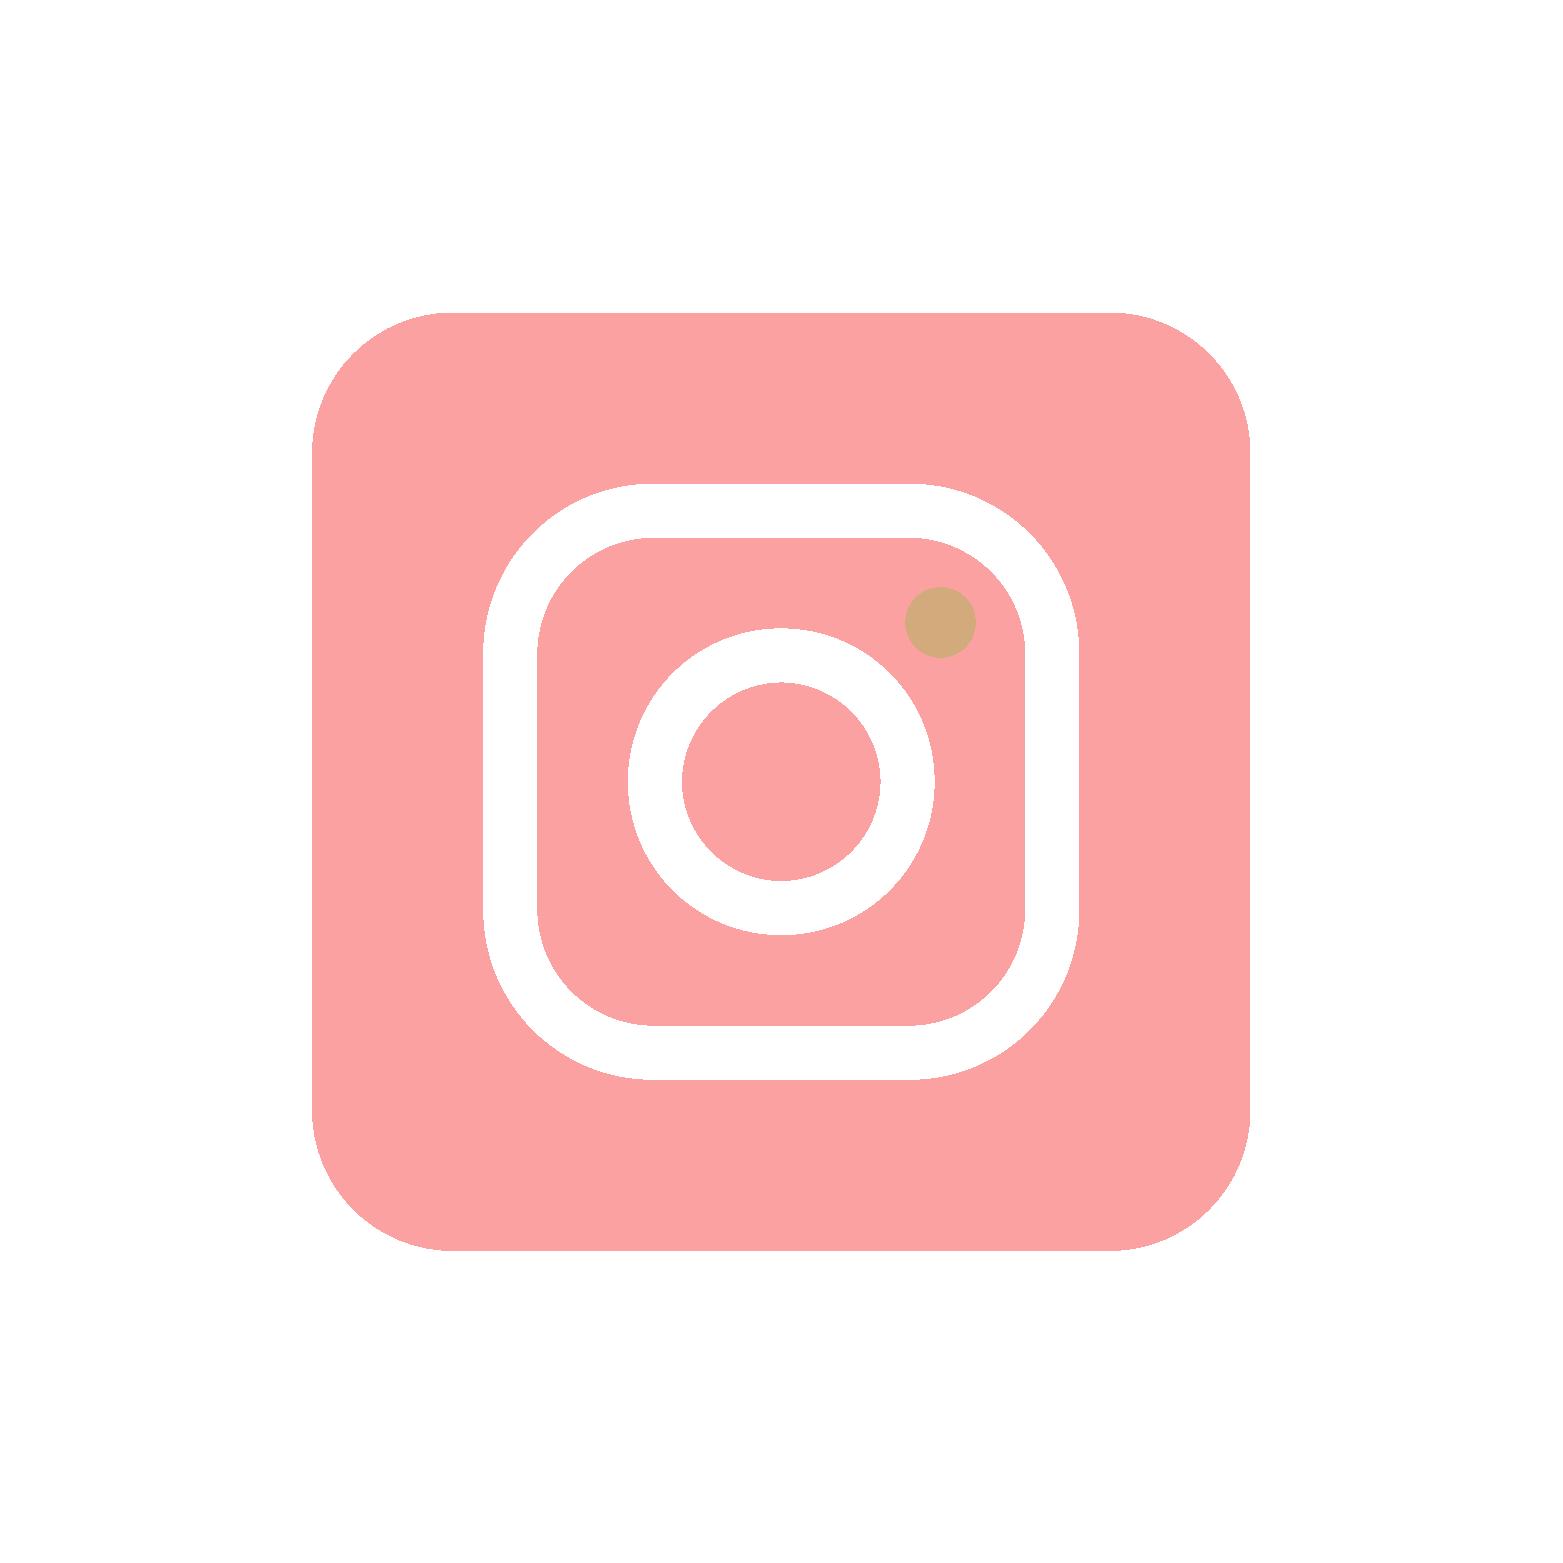 Fitur Live Streaming Instagram undangan pernikahan digital Elinvi